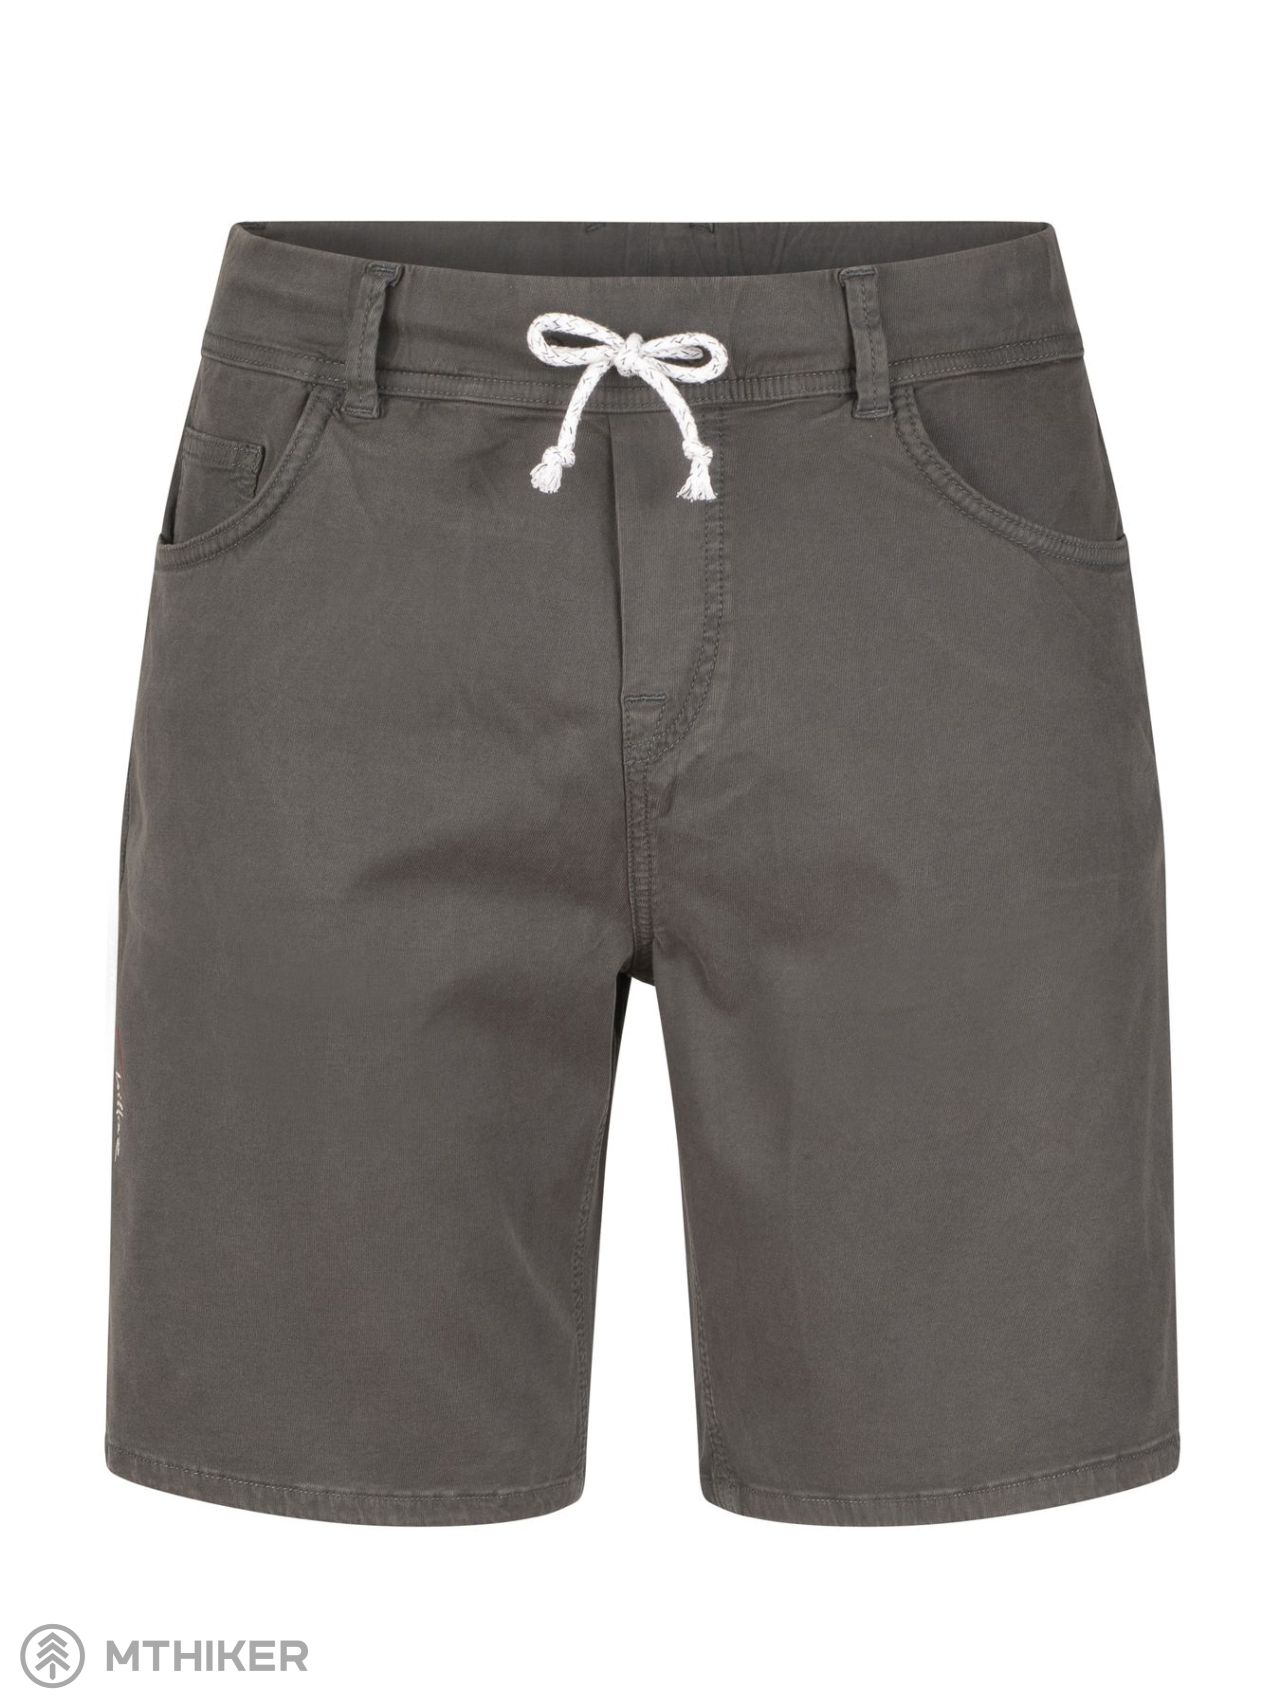 Chillaz OAHU-BLACK shorts, brown/grey